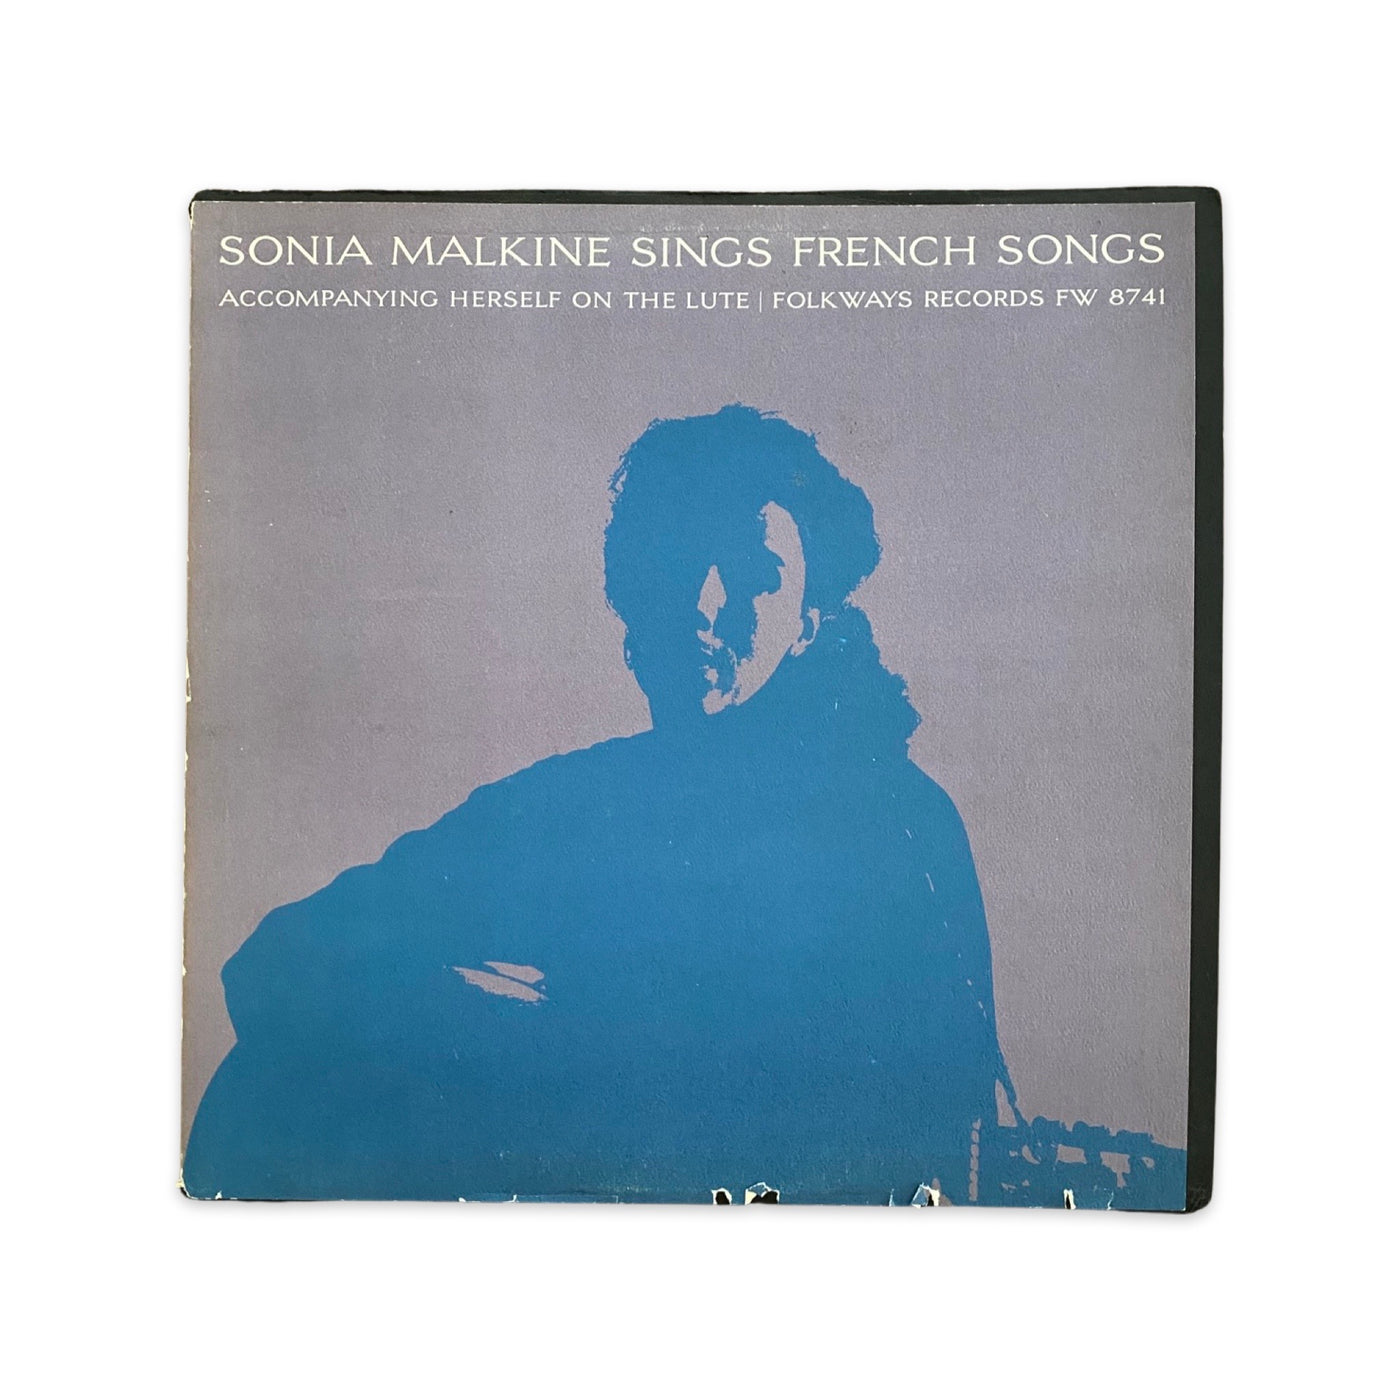 Sonia Malkine - Sonia Malkine Sings French Songs